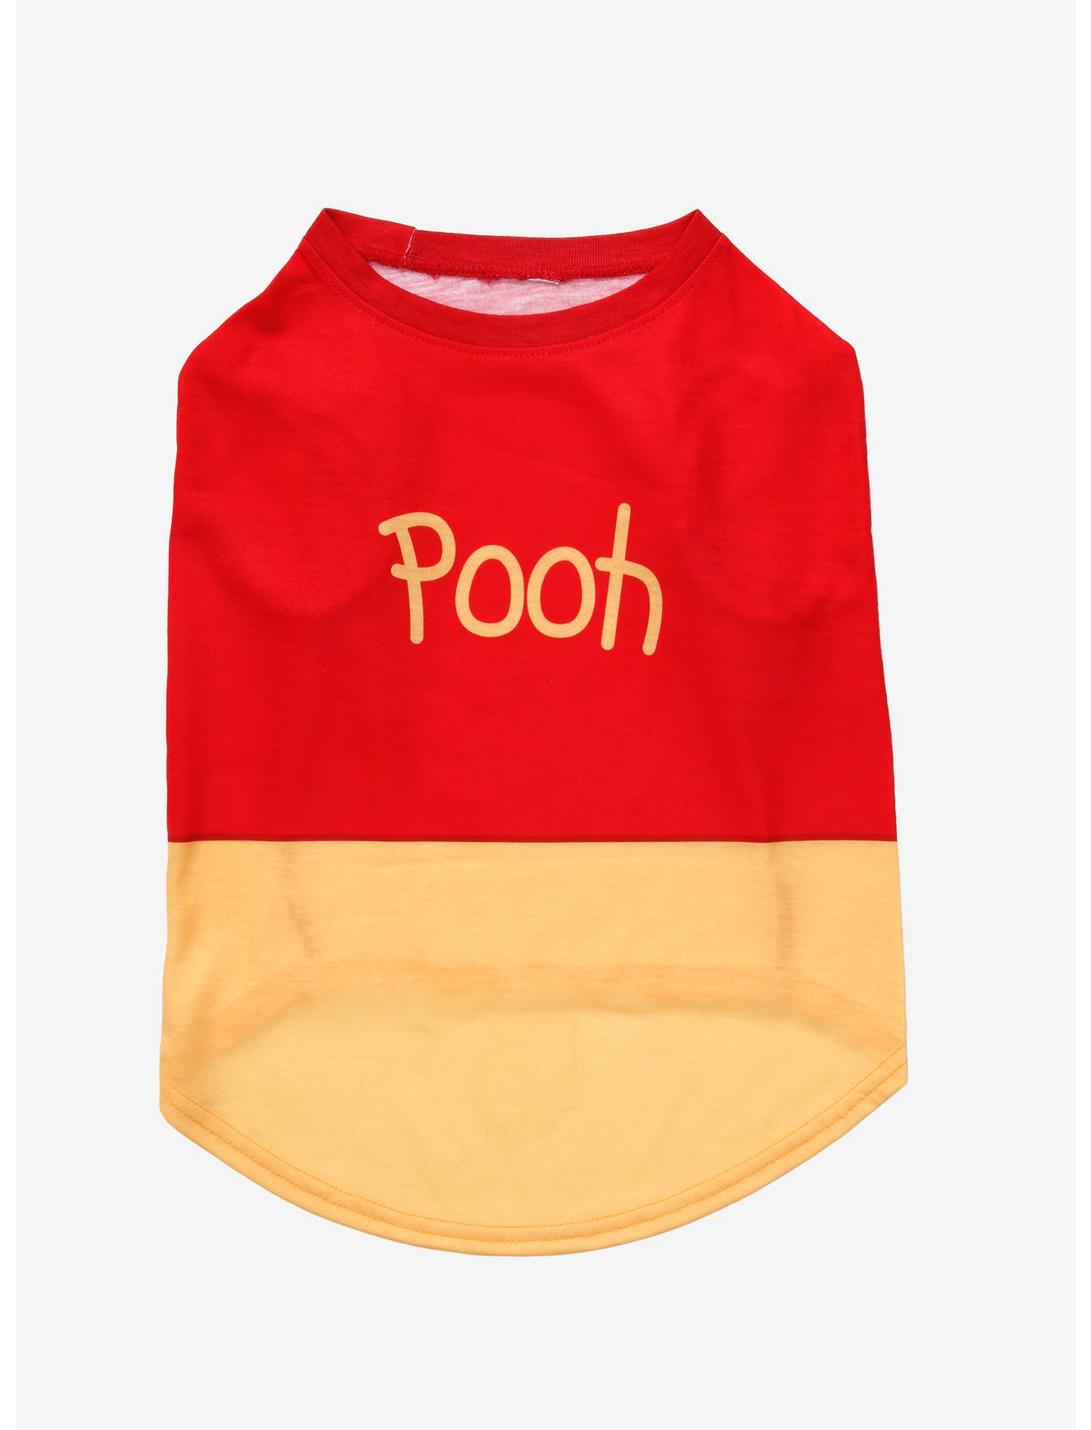 Disney Winnie the Pooh Replica Pet T-Shirt, MULTI, hi-res